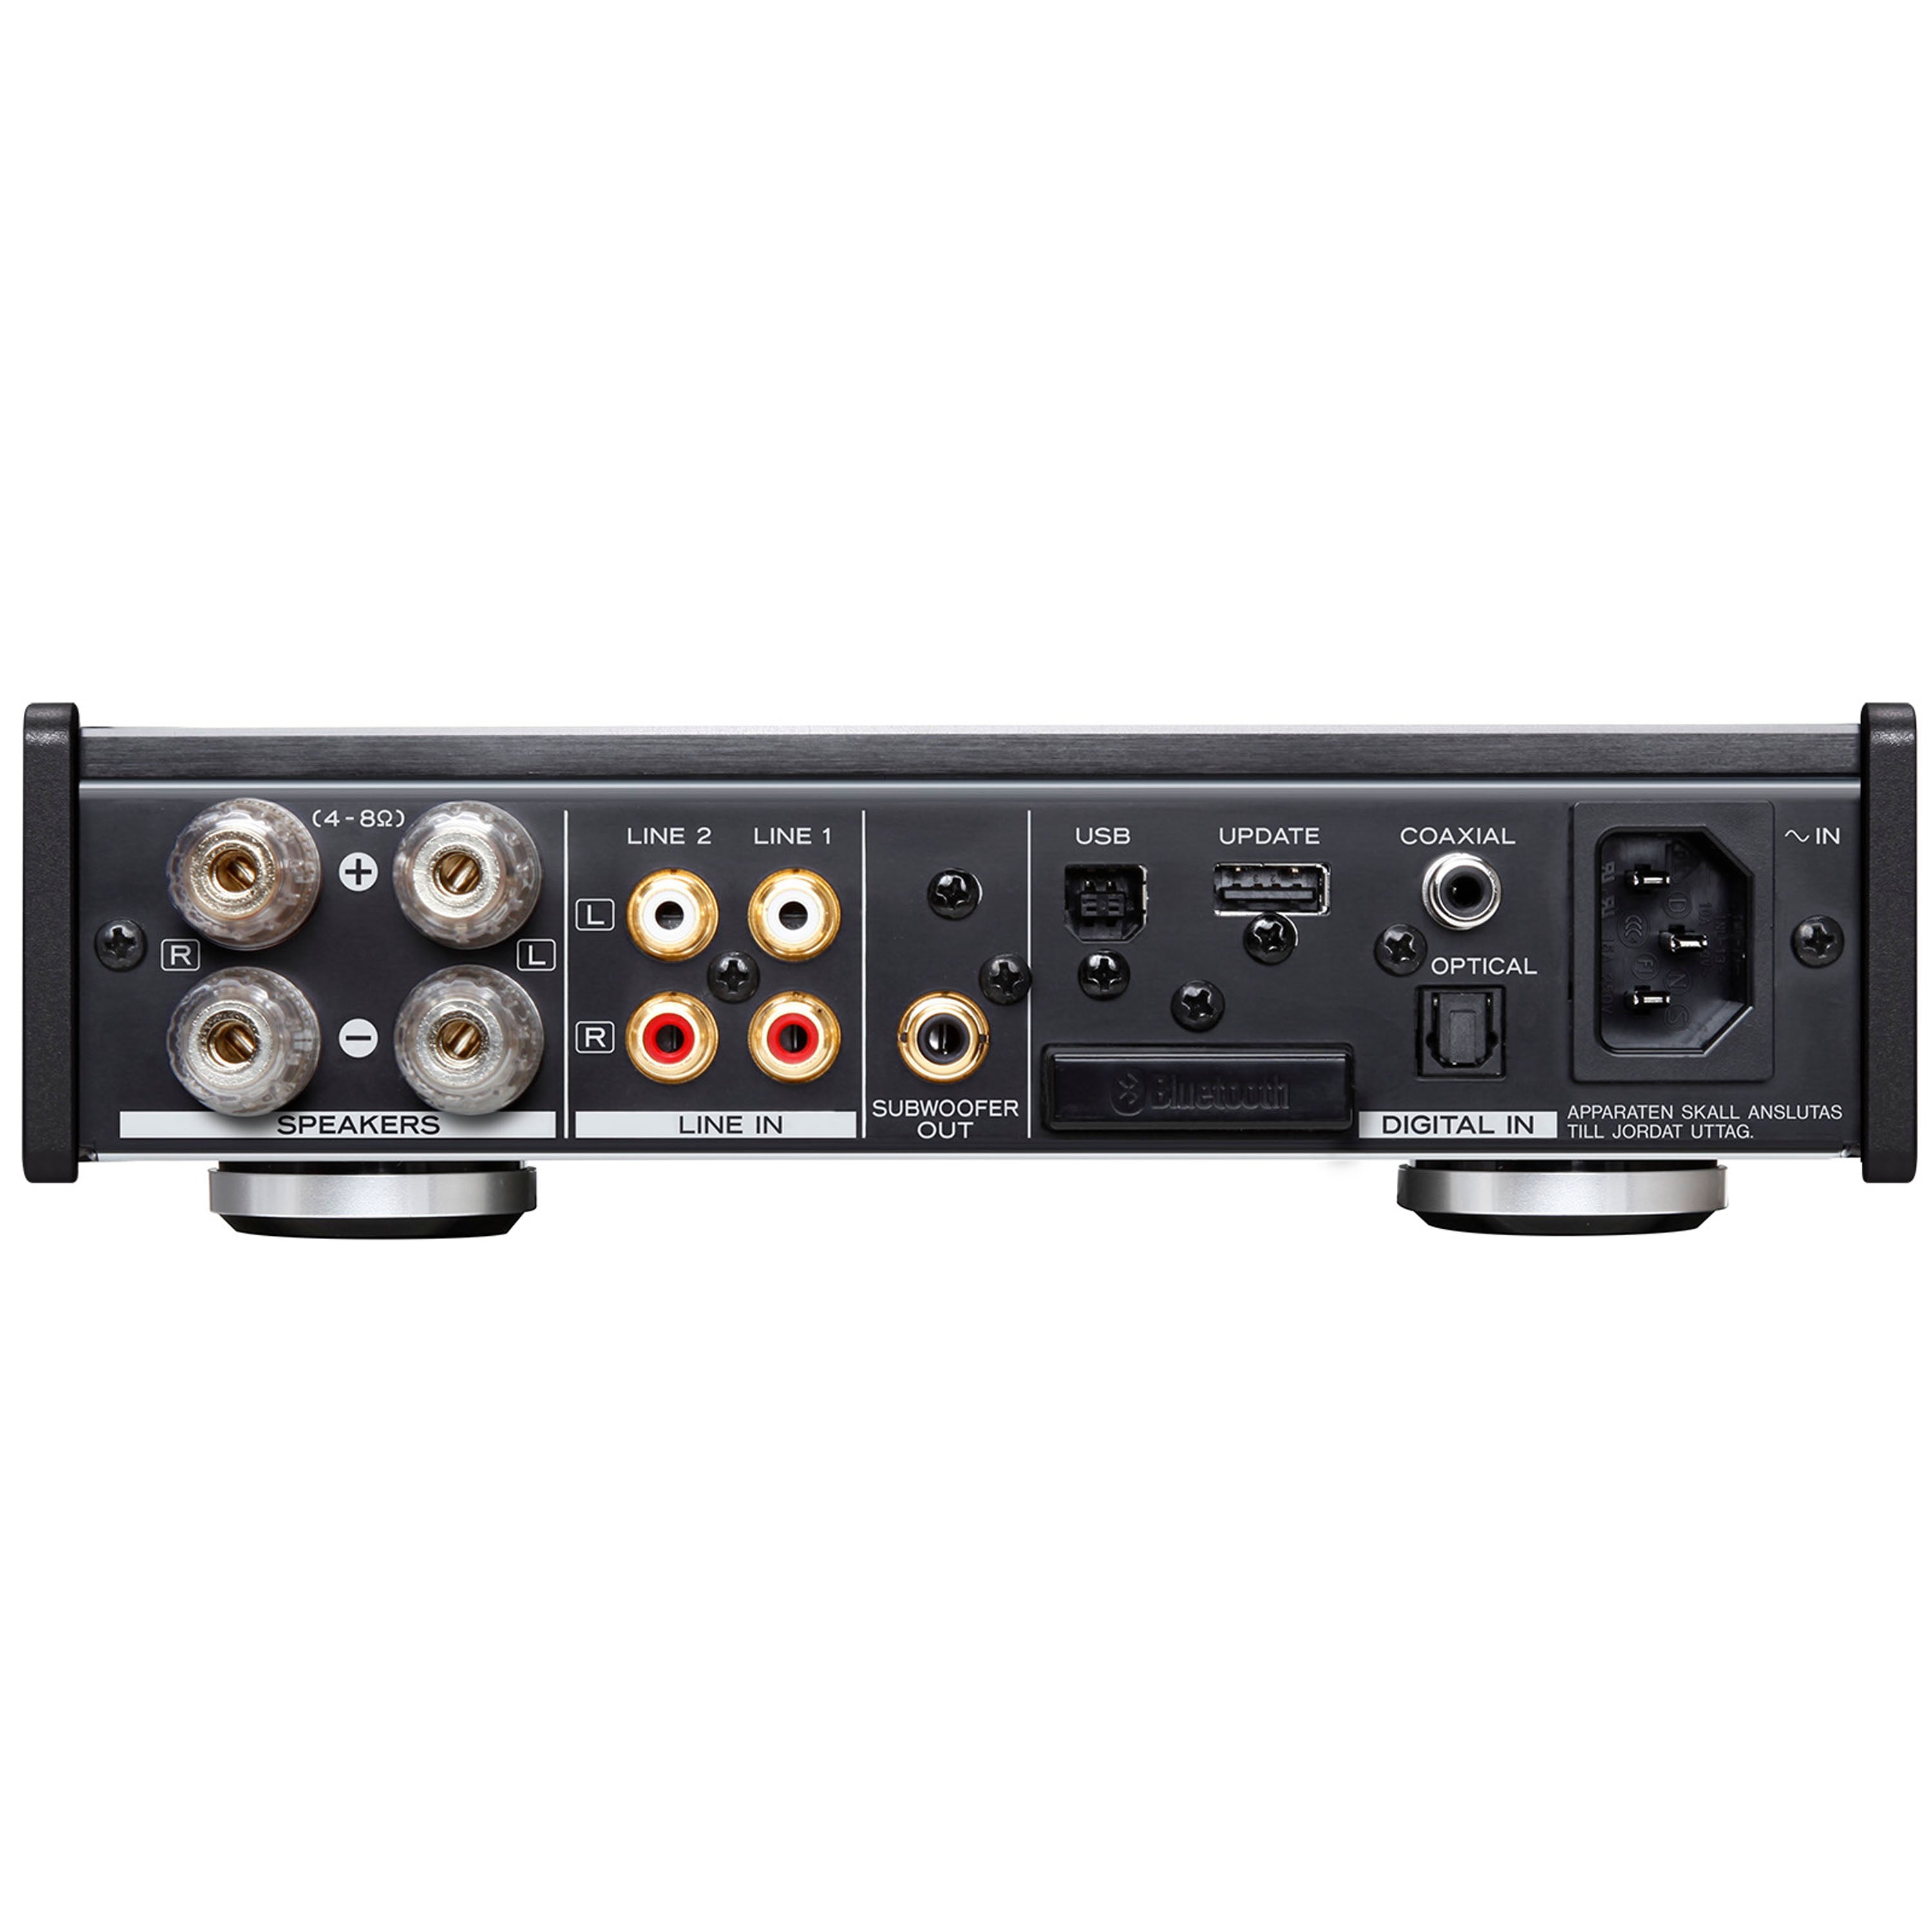 TEAC AI-301DA-X Integrated Stereo Amplifier with USB DAC (Black)